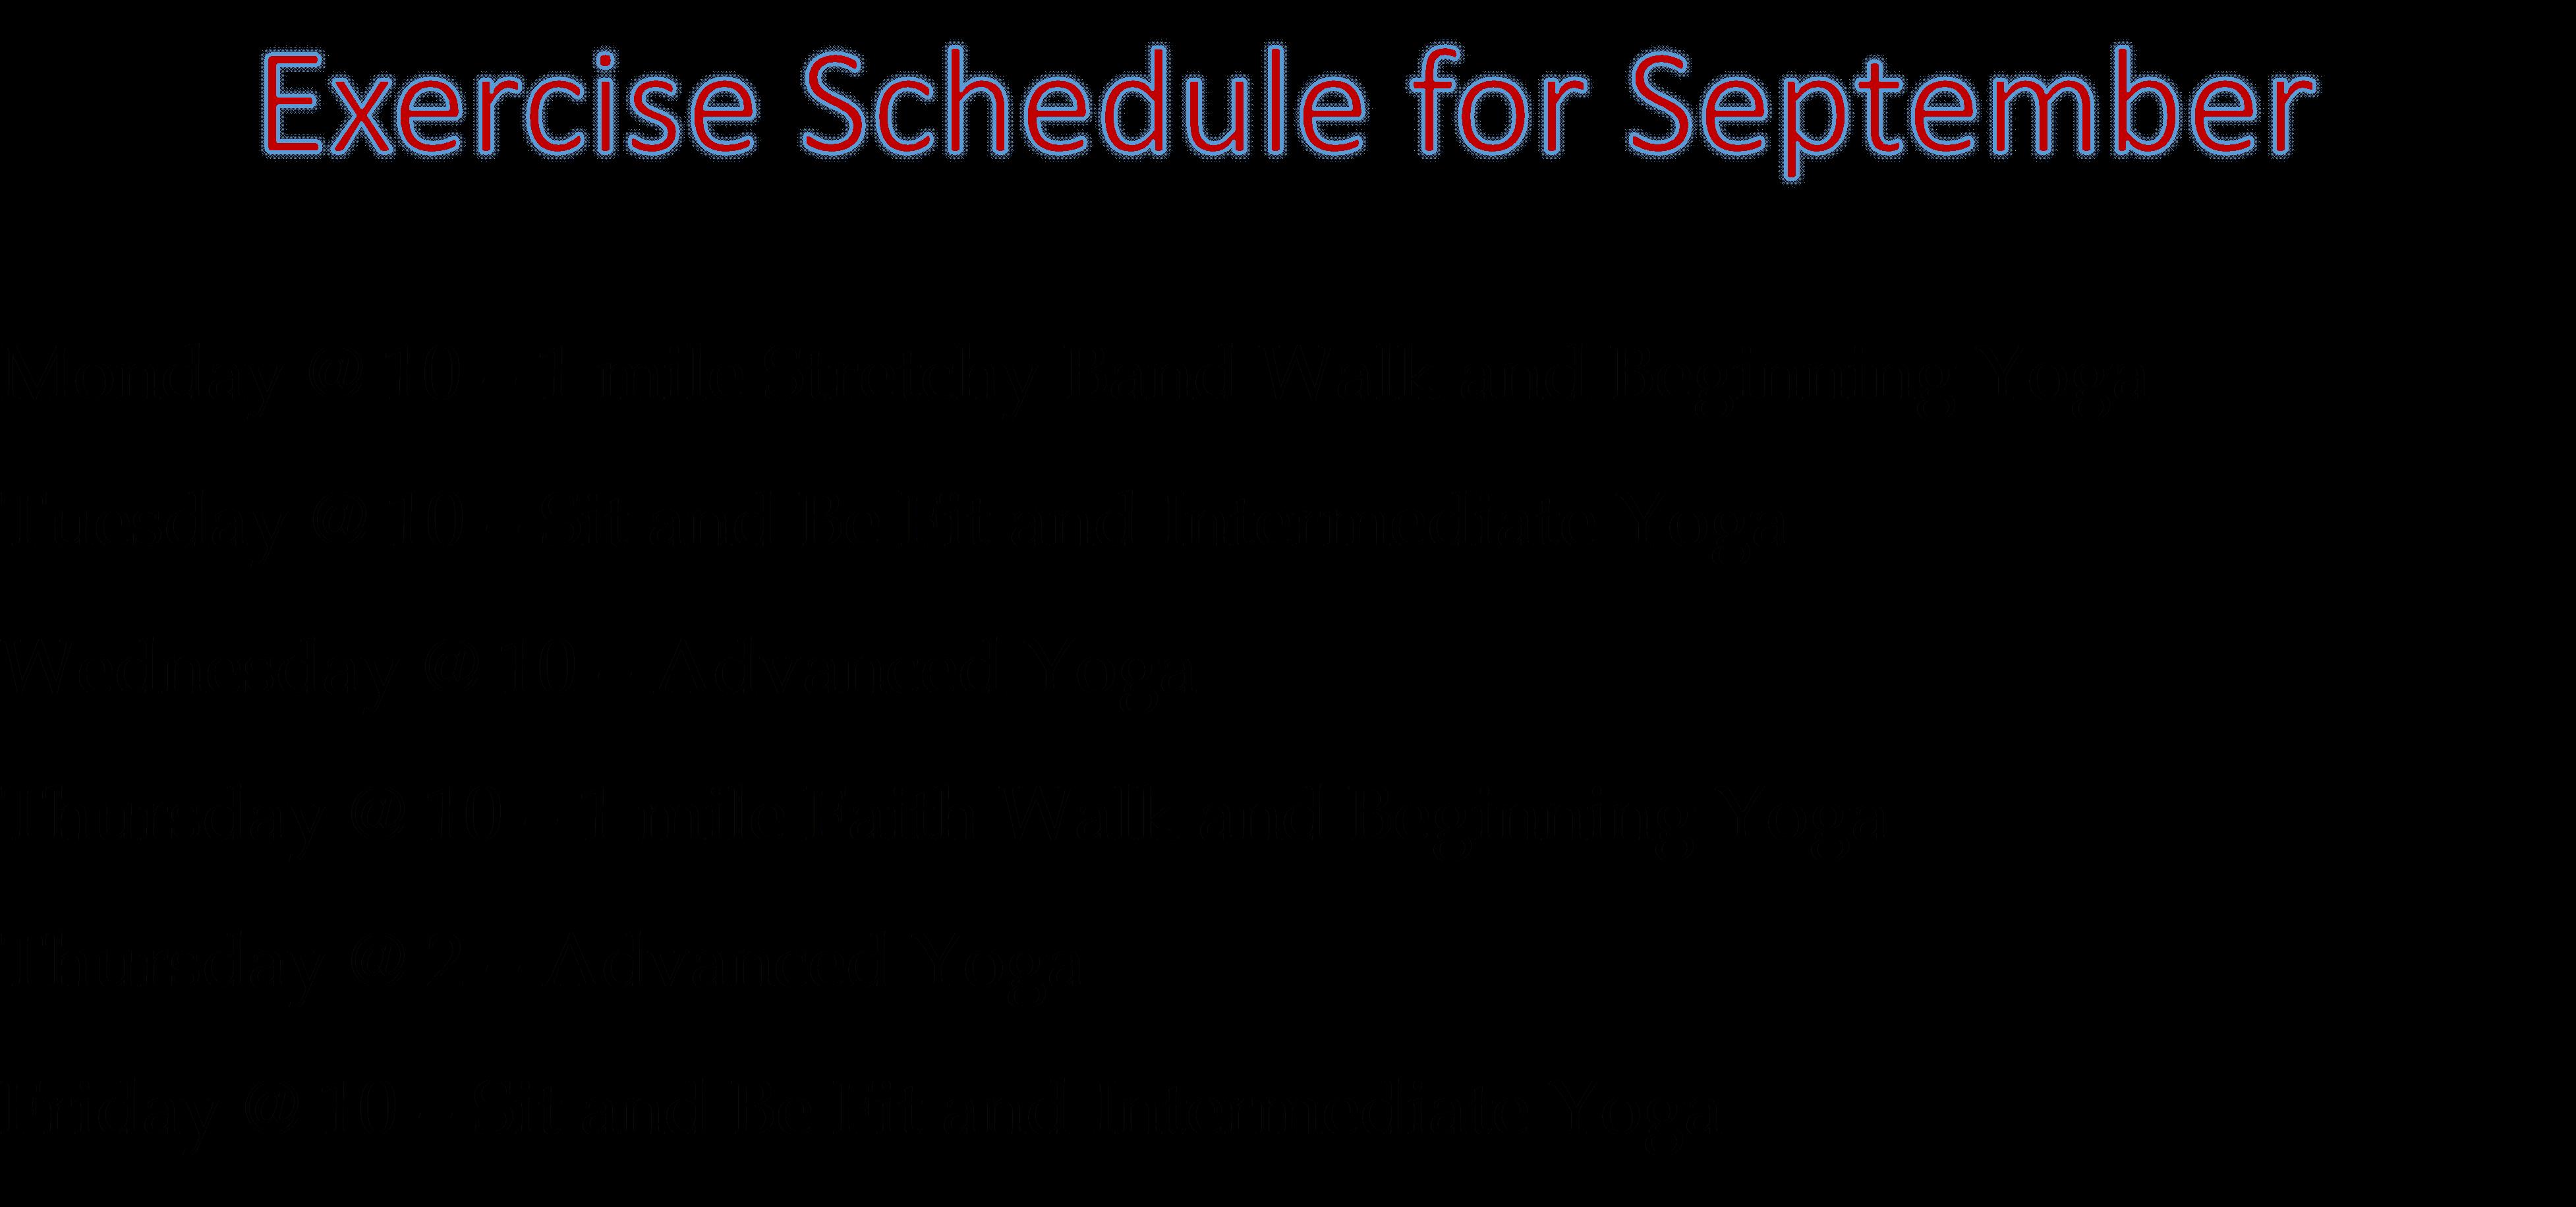 September Exercise Schedule.jpg